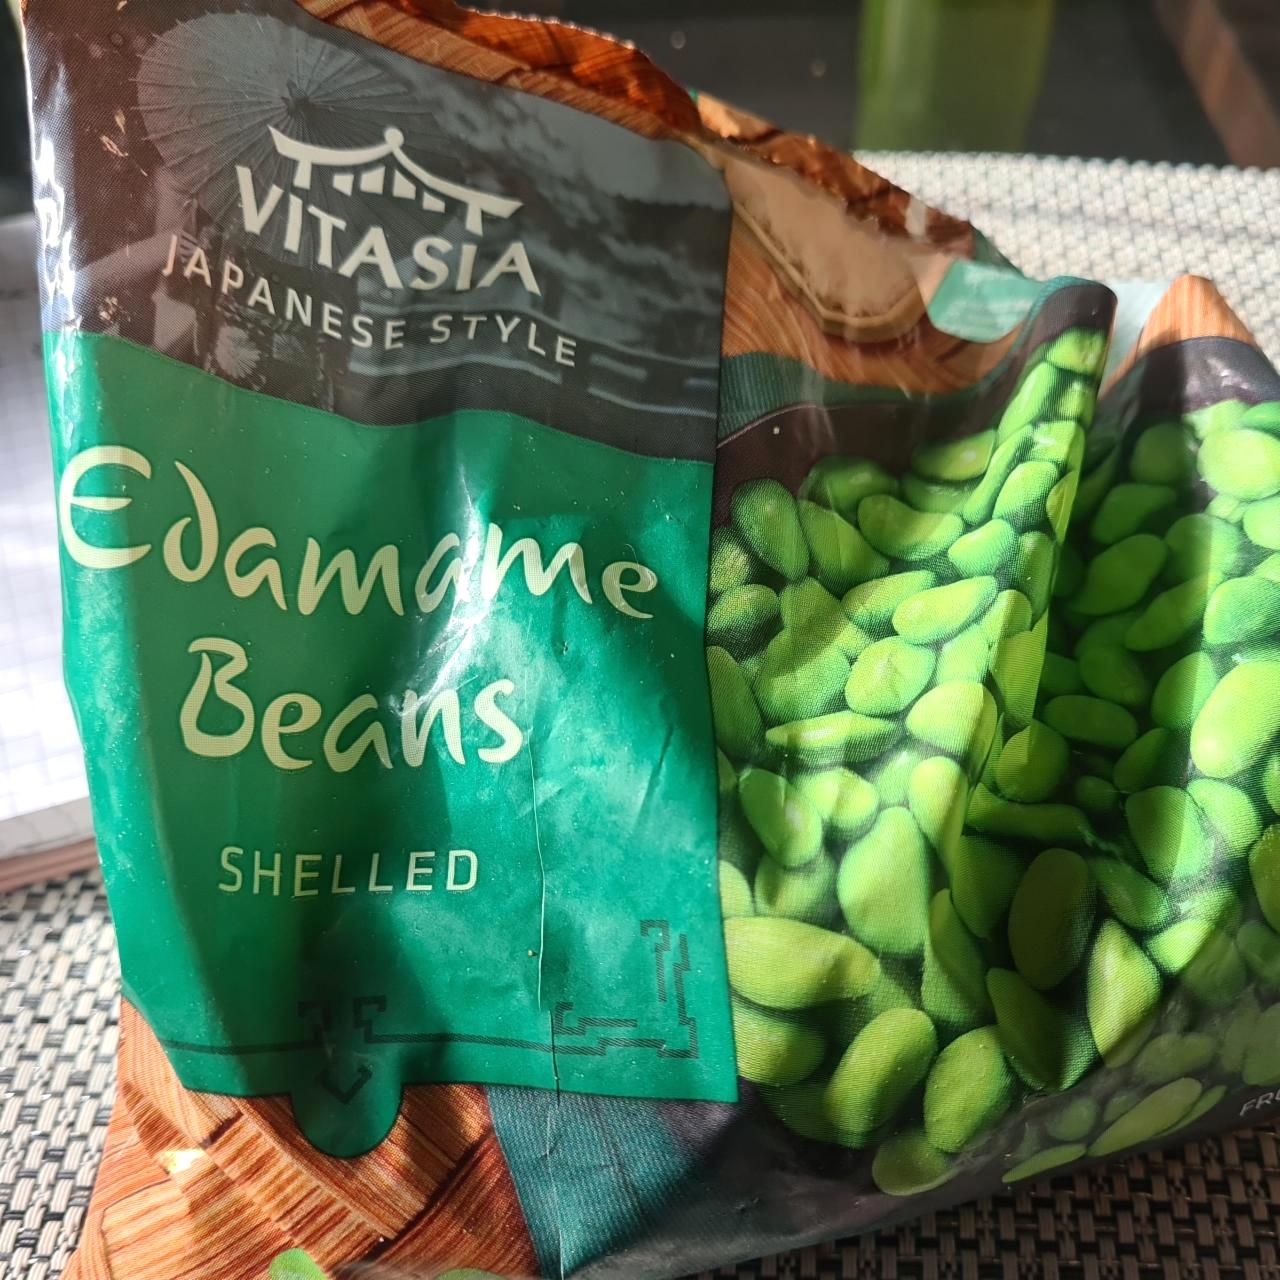 Képek - Edamame beans shelled Vitasia